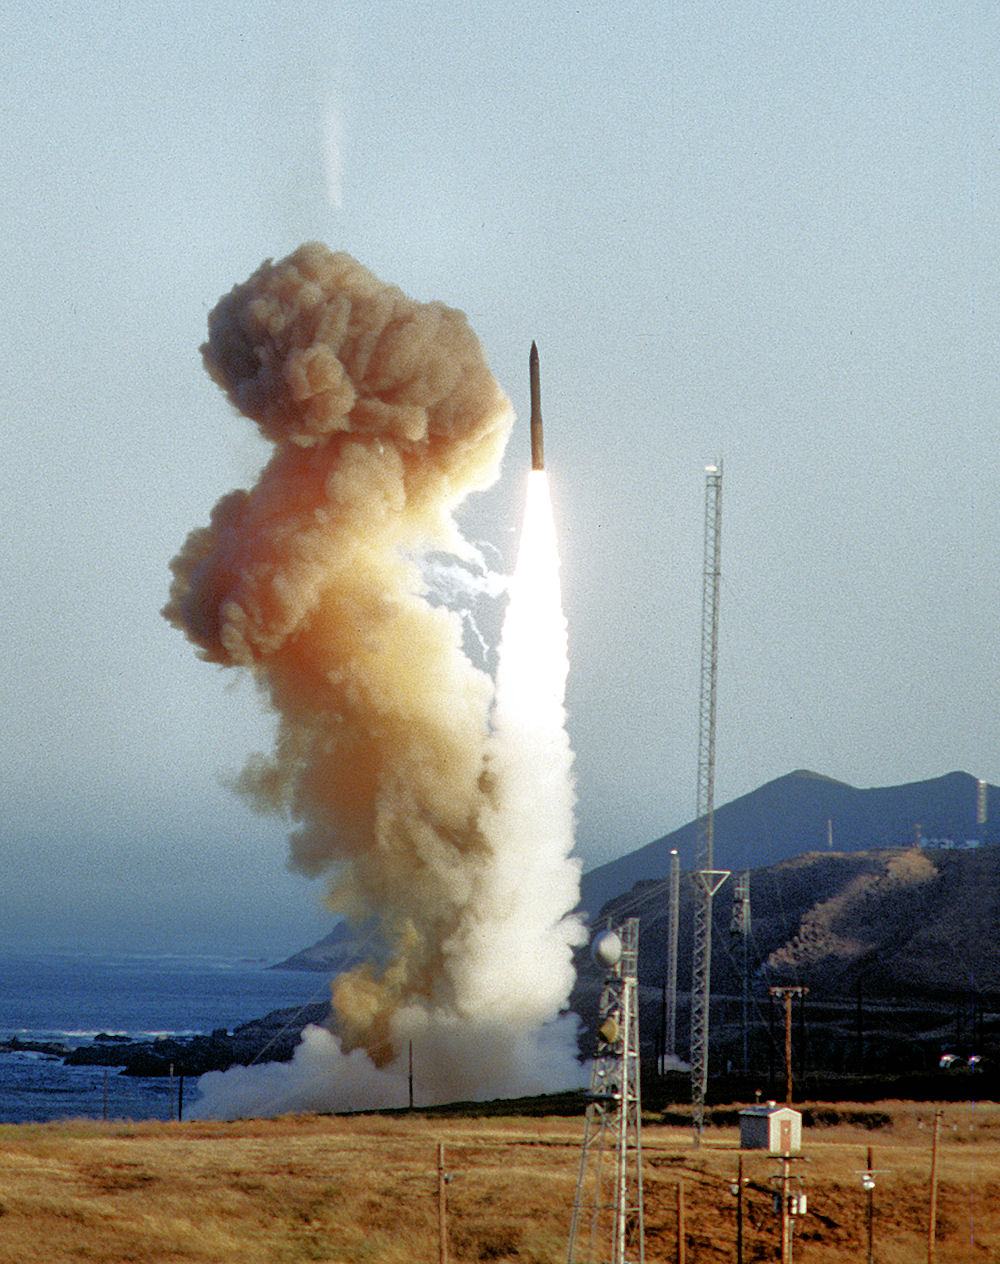 http://upload.wikimedia.org/wikipedia/commons/9/90/MinutemanIII-test-launch.jpg